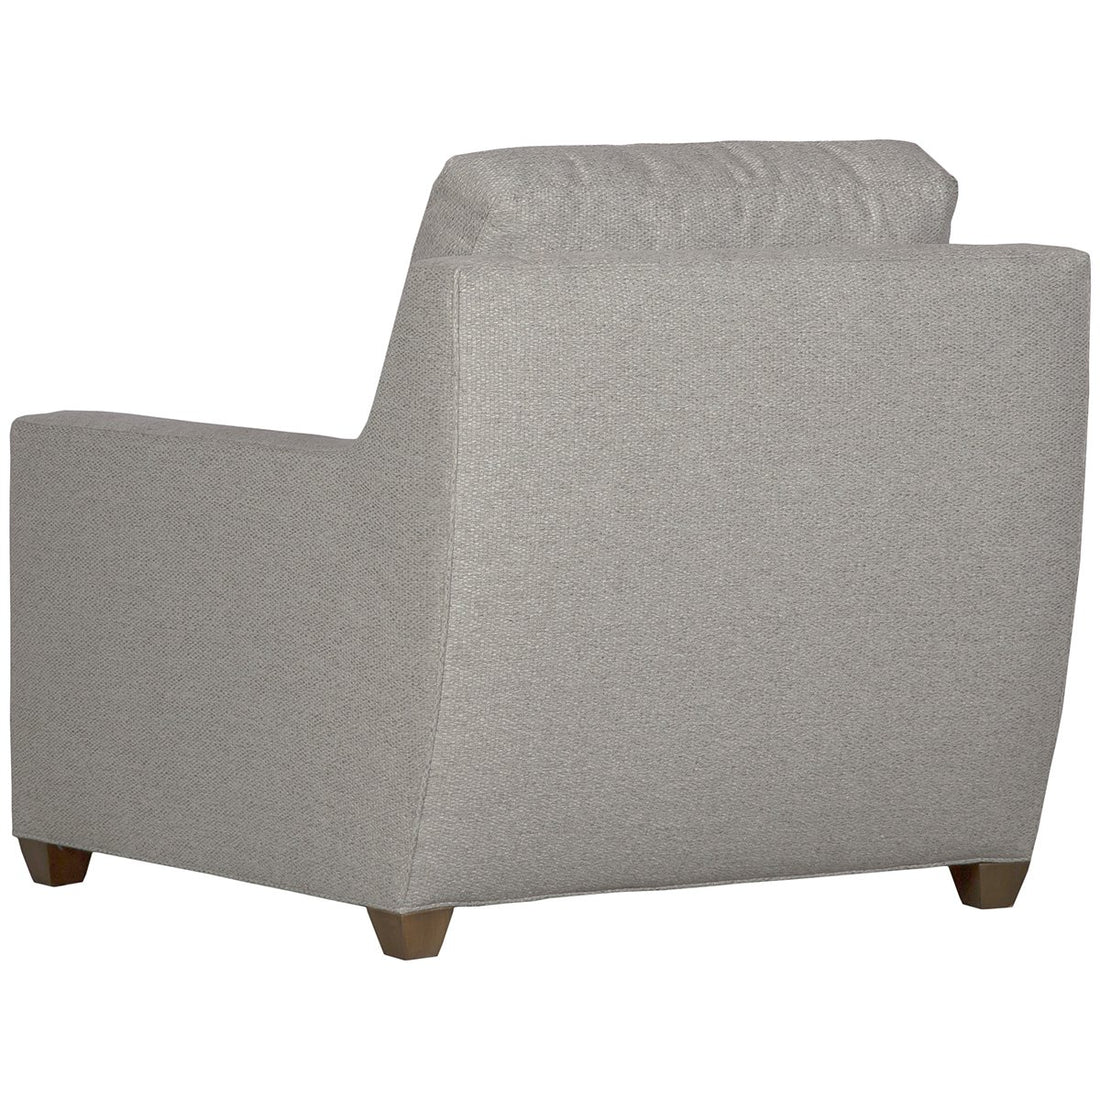 Vanguard Furniture Fairgrove Chair - Kobe Mist